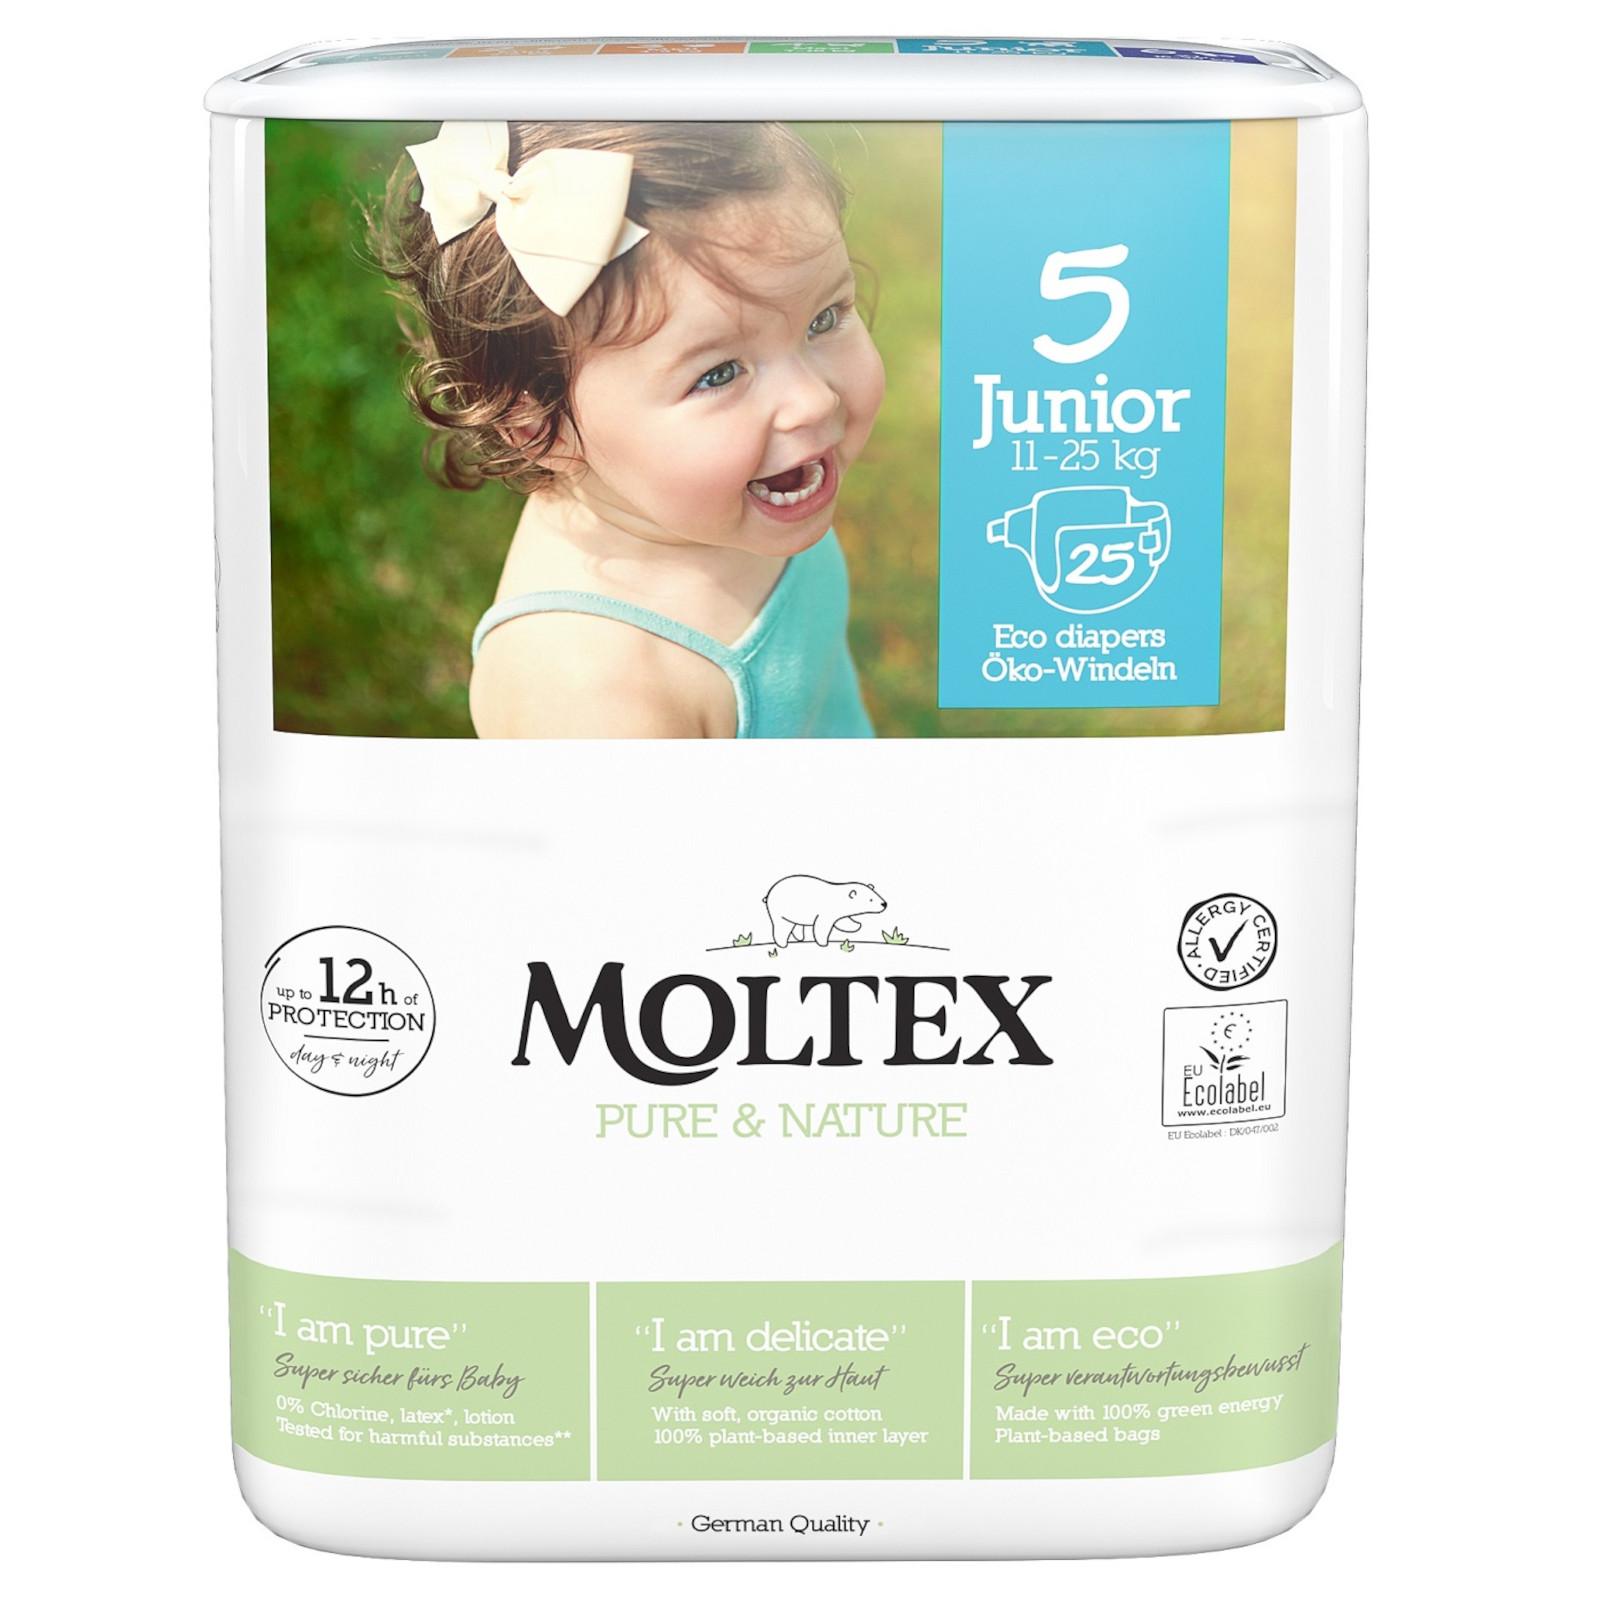 Moltex Dětské plenky Junior 11-25 kg Pure & Nature 25 ks